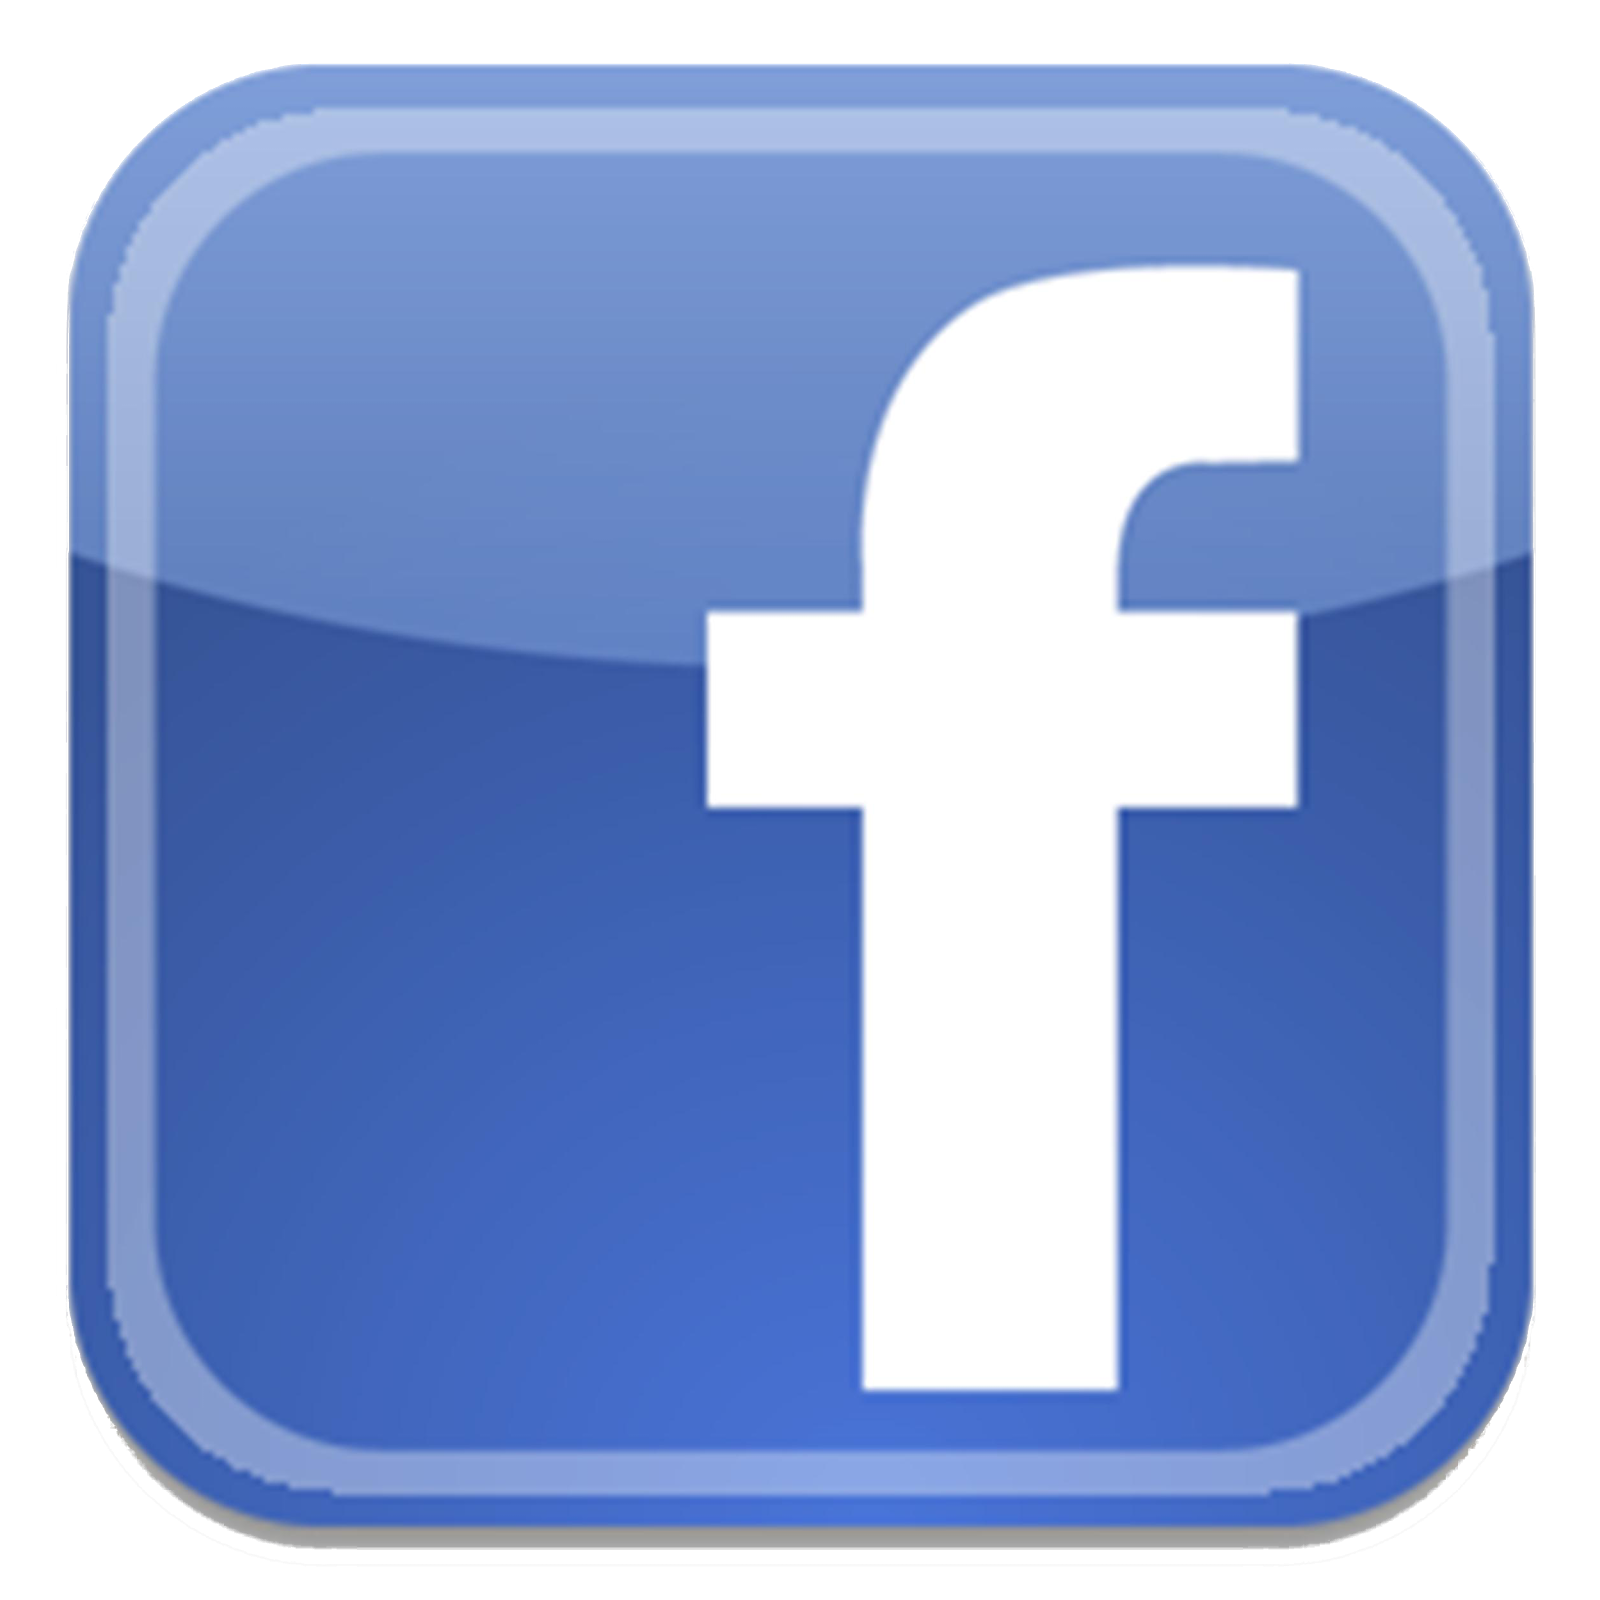 Facebook Logo Picture PNG Transparent Background, Free Download #11